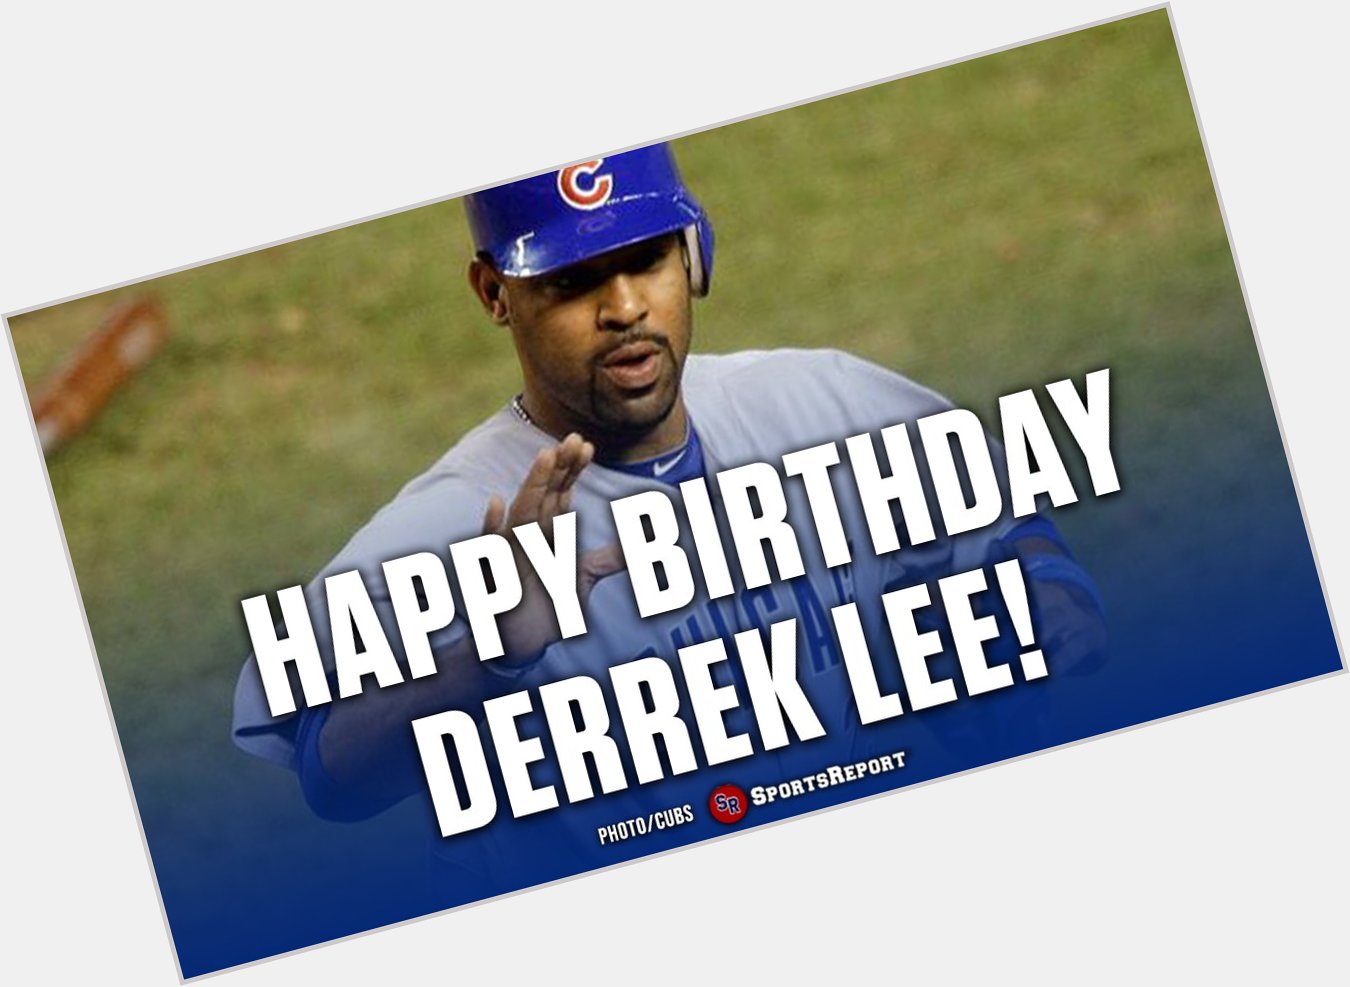  Fans, let\s wish Derrek Lee a Happy Birthday! GO CUBS!! 